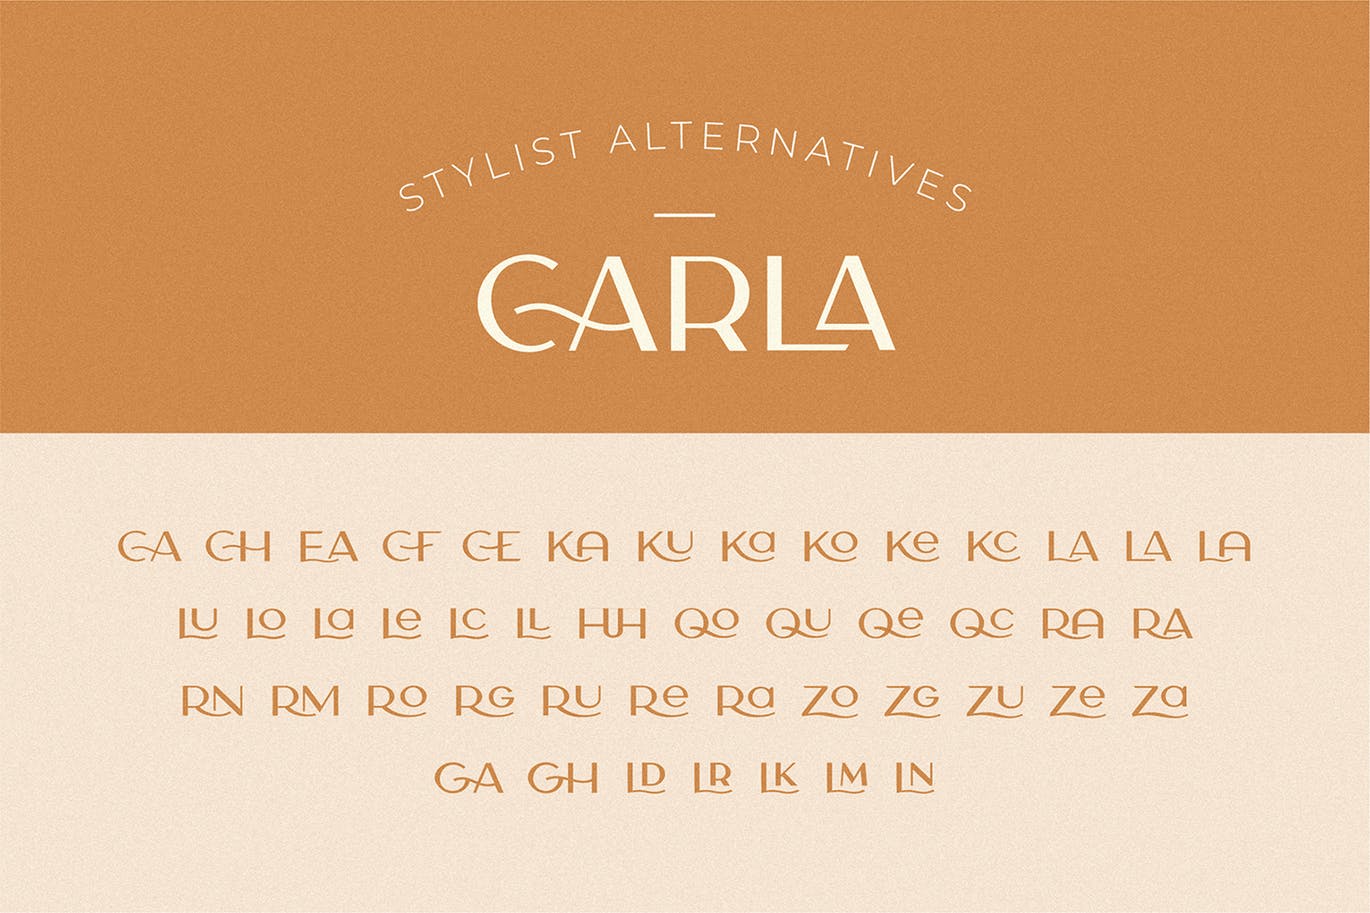 Carla Sans - Elegant Typeface